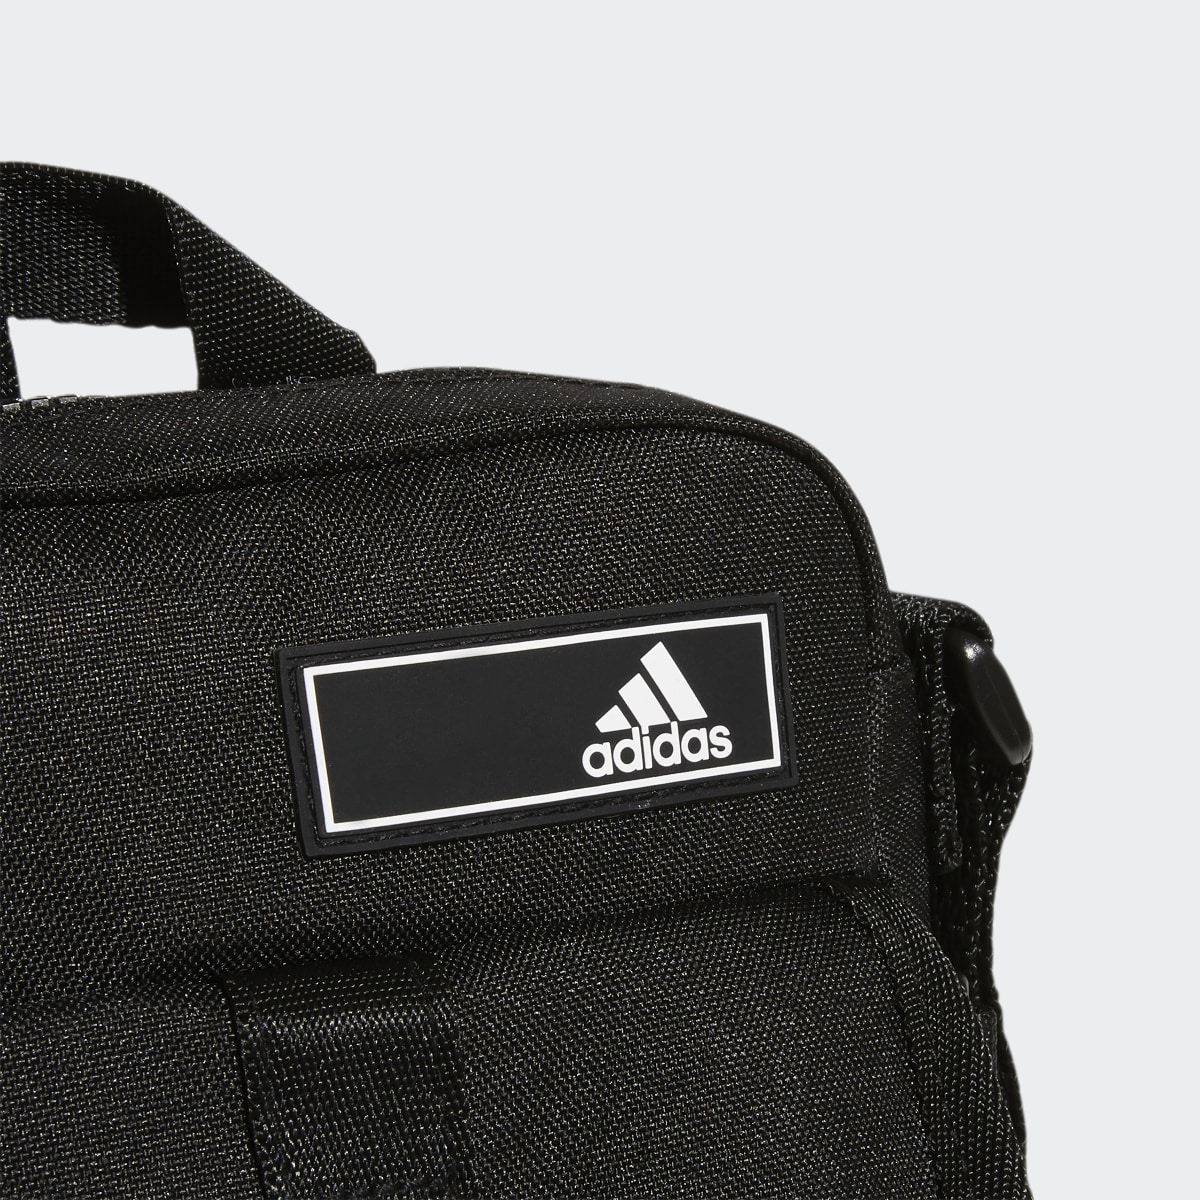 Adidas Amplifier 2 Festival Crossbody Bag. 6